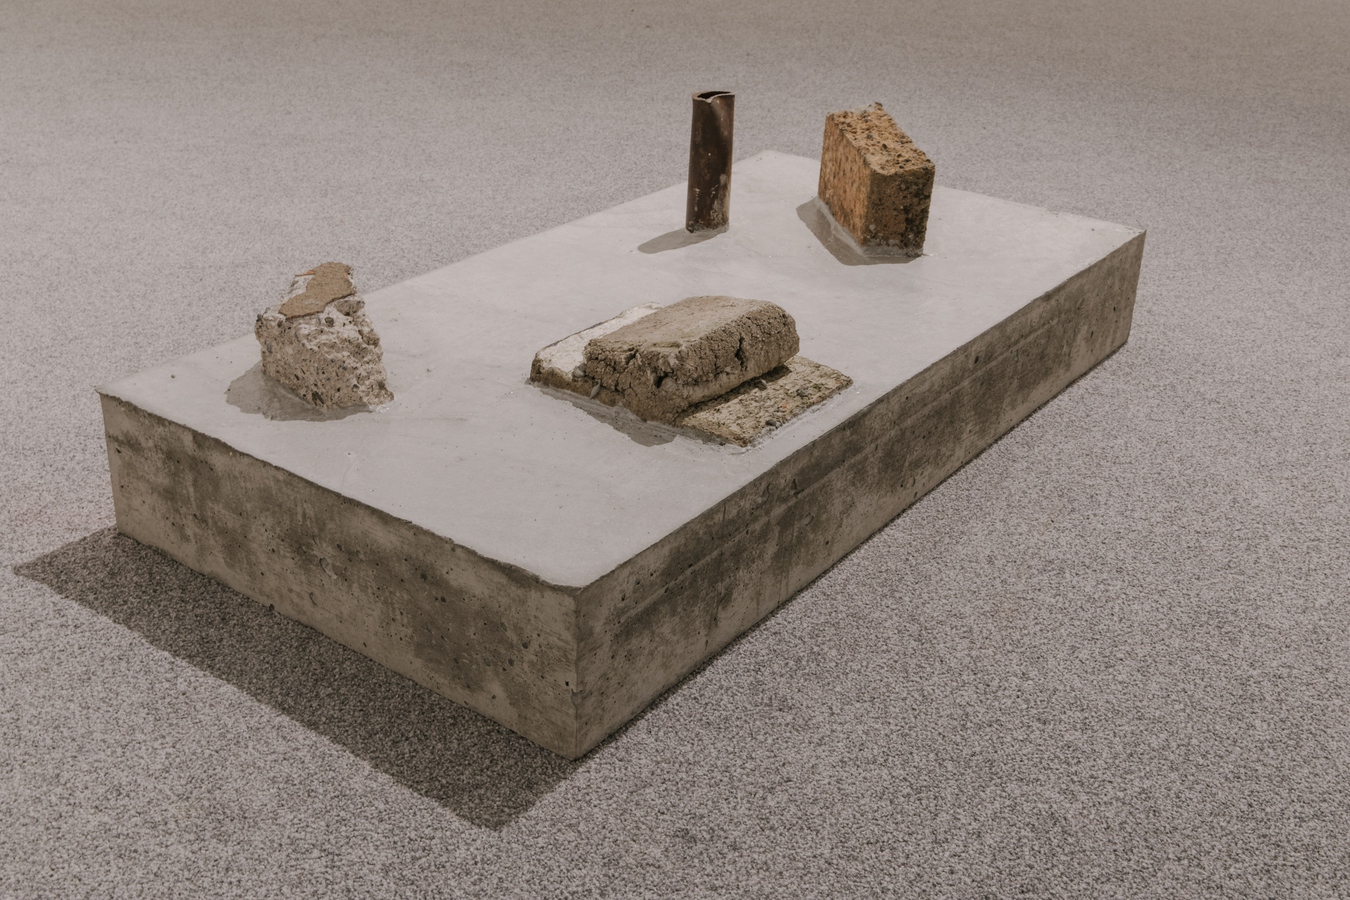 Image: Sam Towse, Speckled skin, loose stones (detail), 2022. Concrete, steel, polystyrene, rocks, bricks and concrete detritus. Photo by Nancy Zhou.